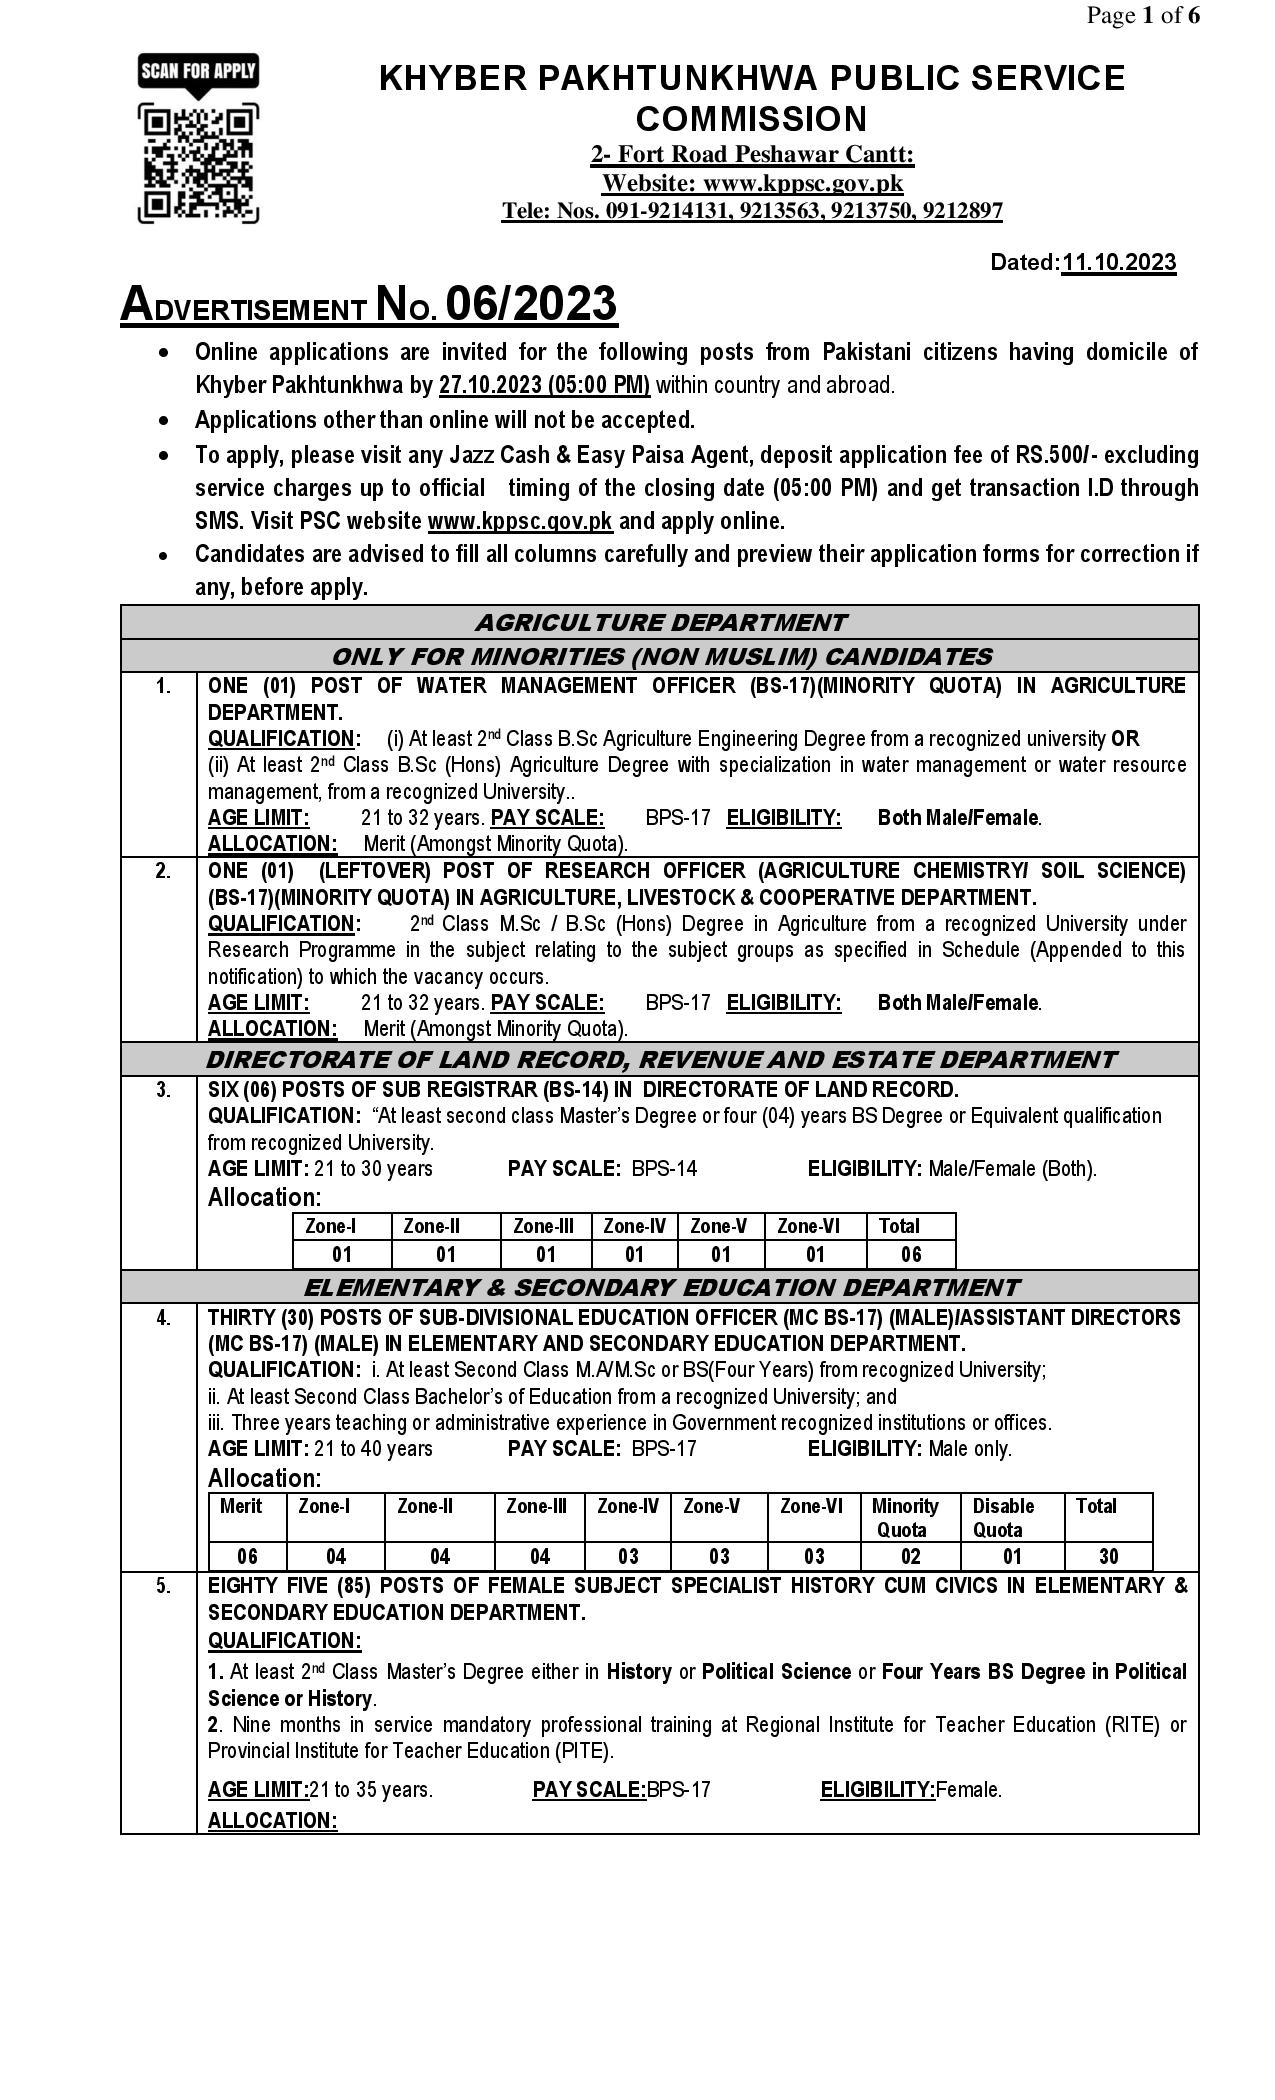 Khyber Pakhtunkhwa Public Service Commission KPPSC Jobs 2023 Latest Advertisement